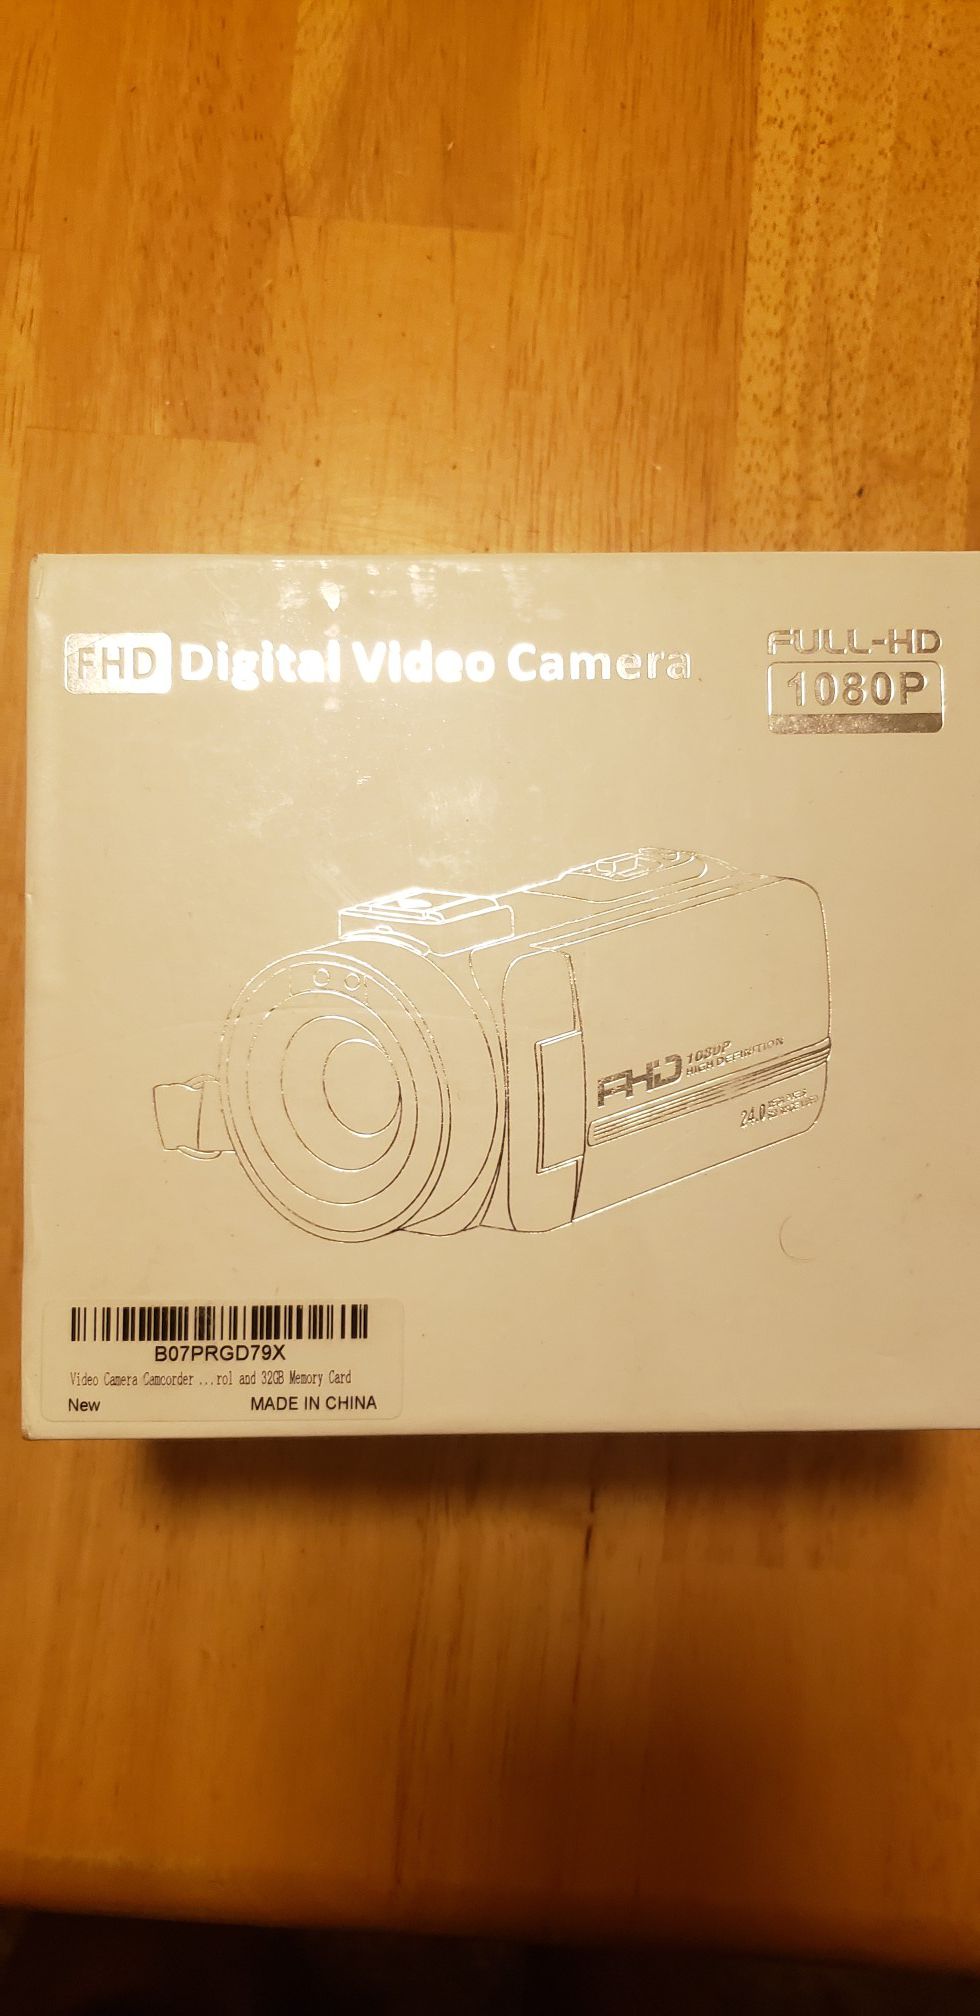 HD DIGITAL VIDEO CAMCORDER